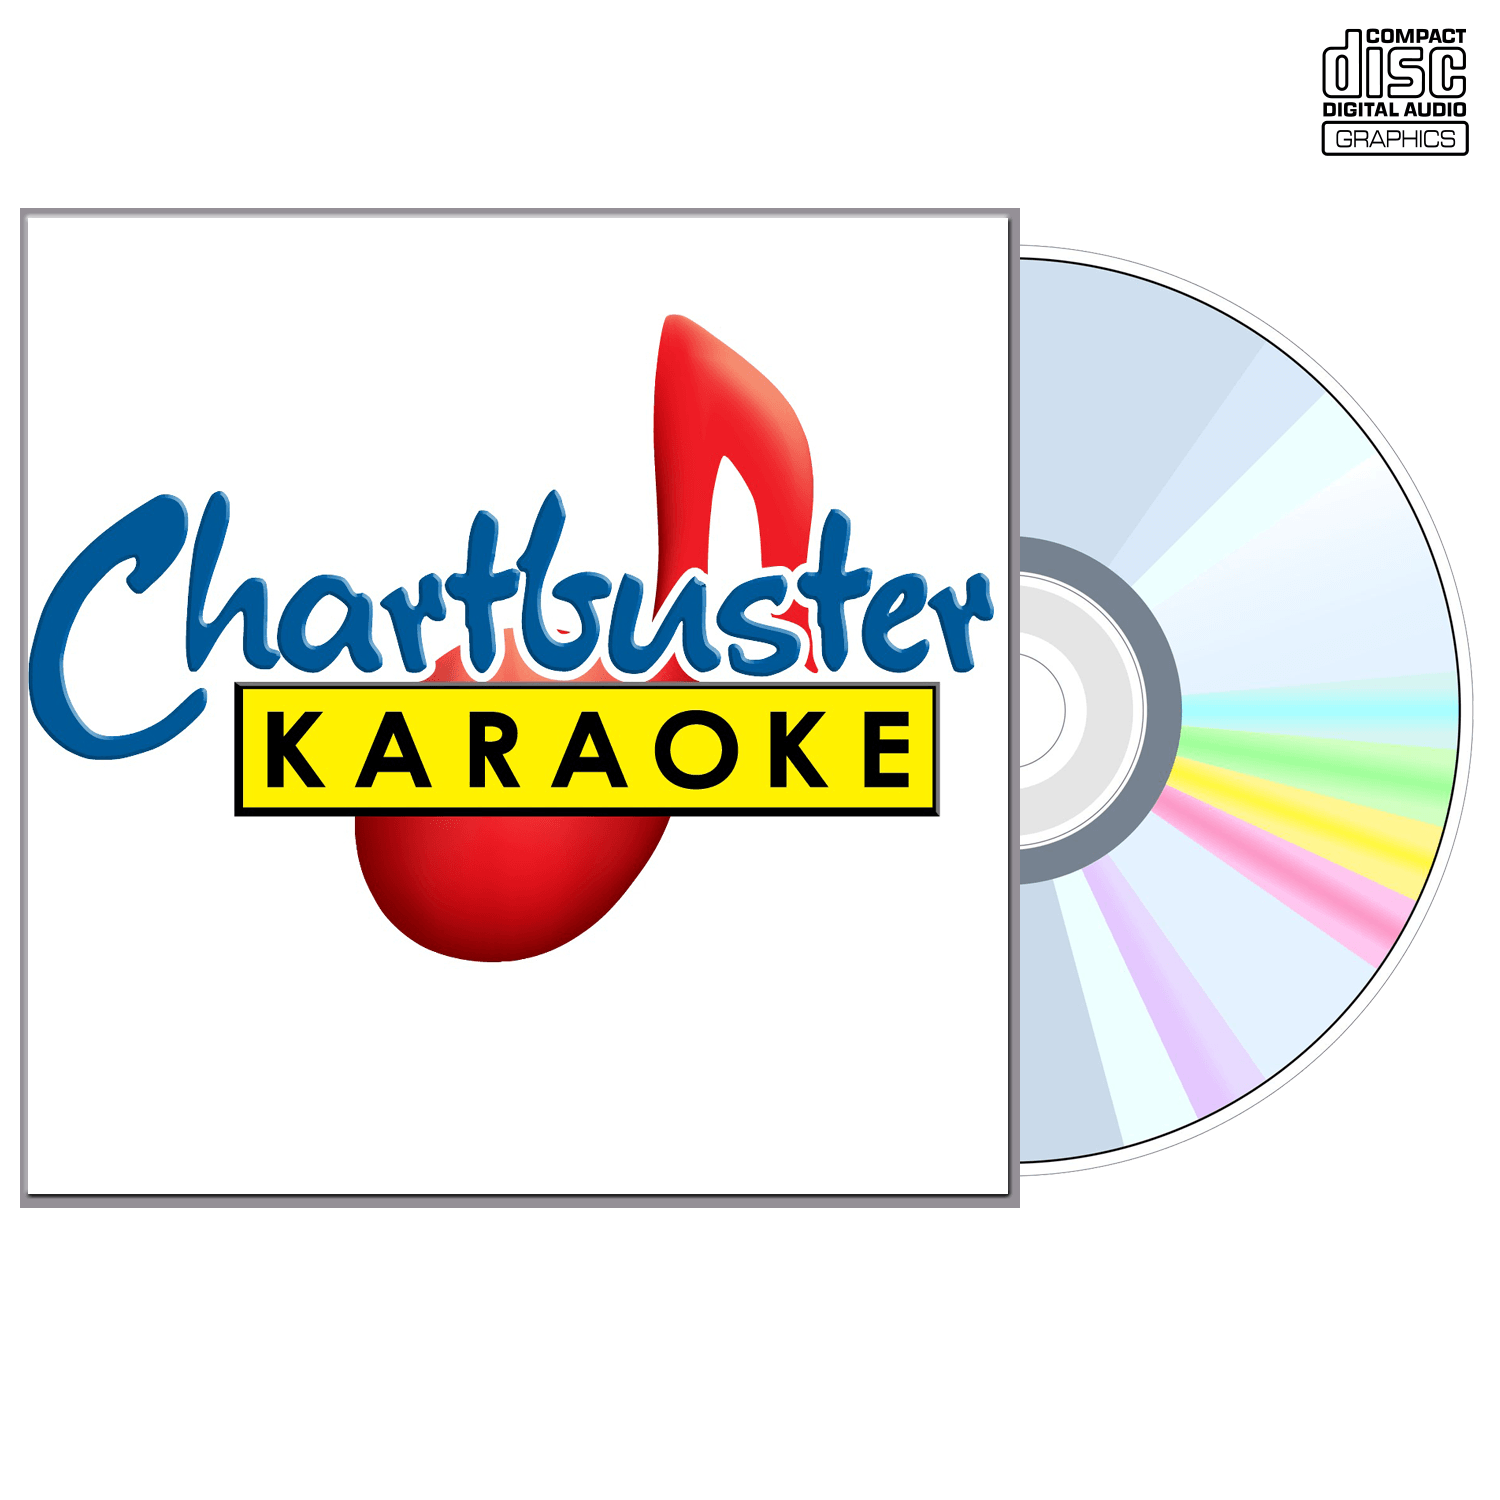 Best Of Alison Krauss - CD+G - Chartbuster Karaoke - Karaoke Home Entertainment